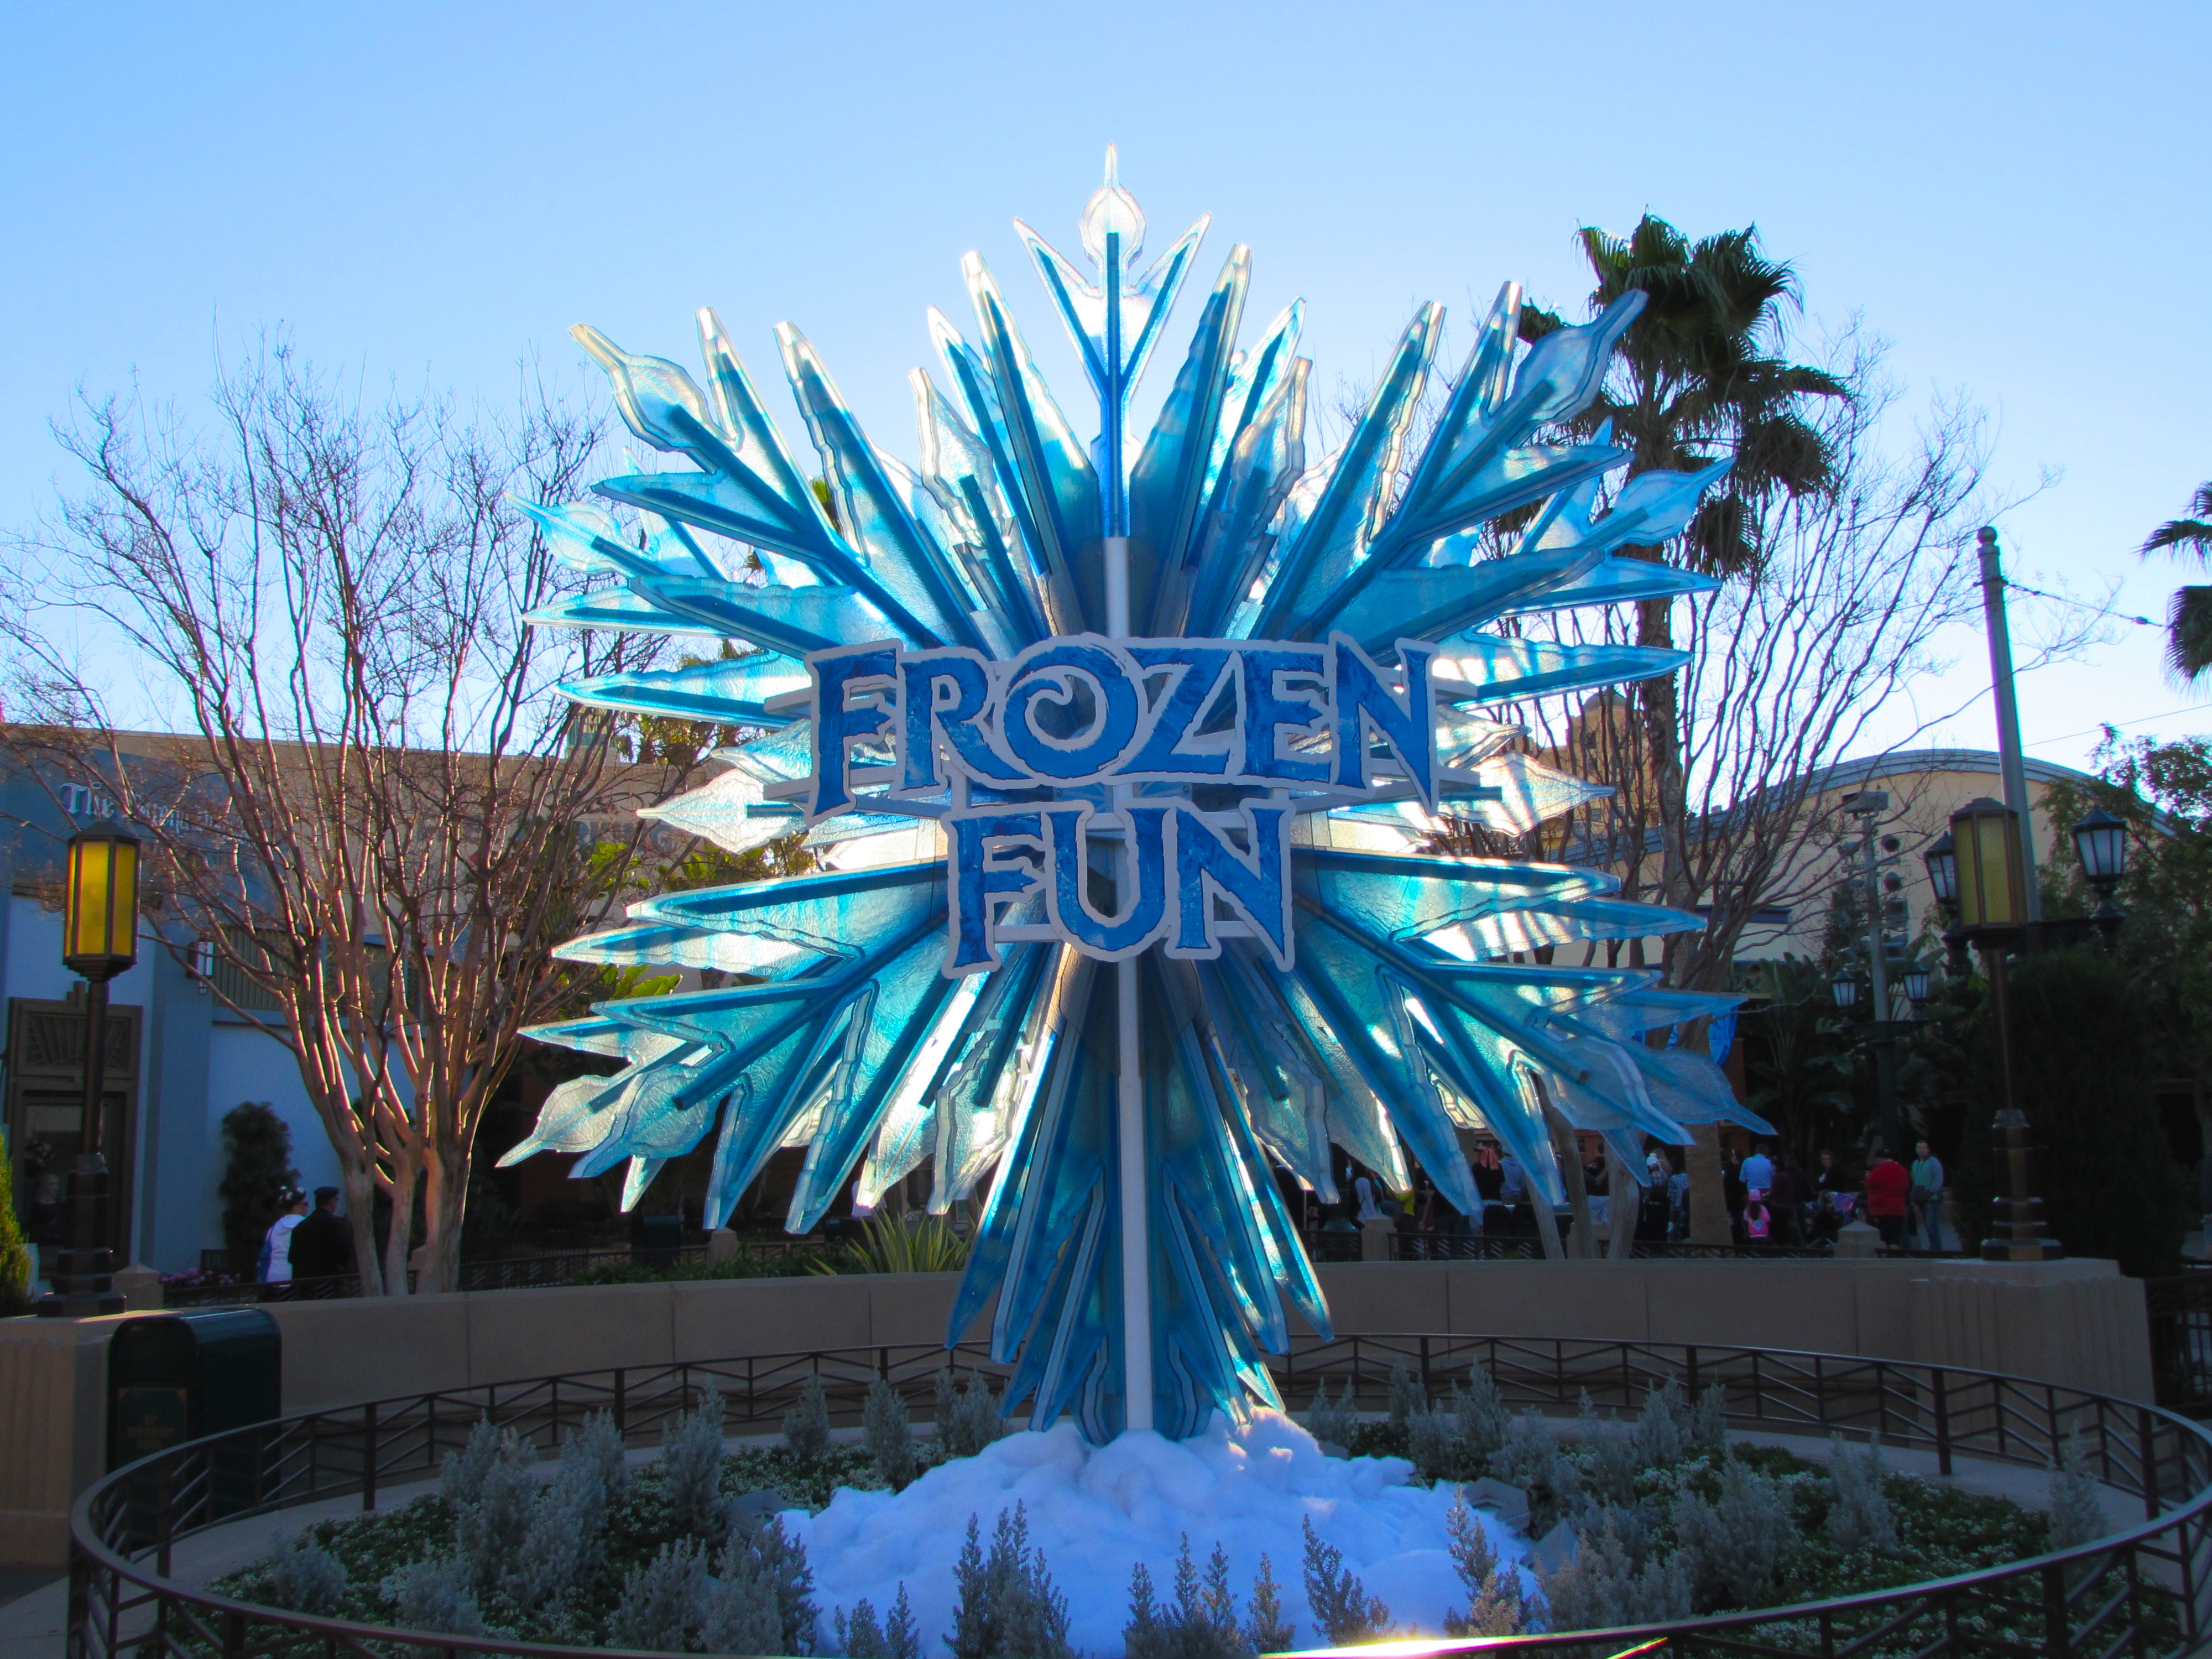 Frozen Fun at Disney California Adventure Park | Travel Advice by Cody